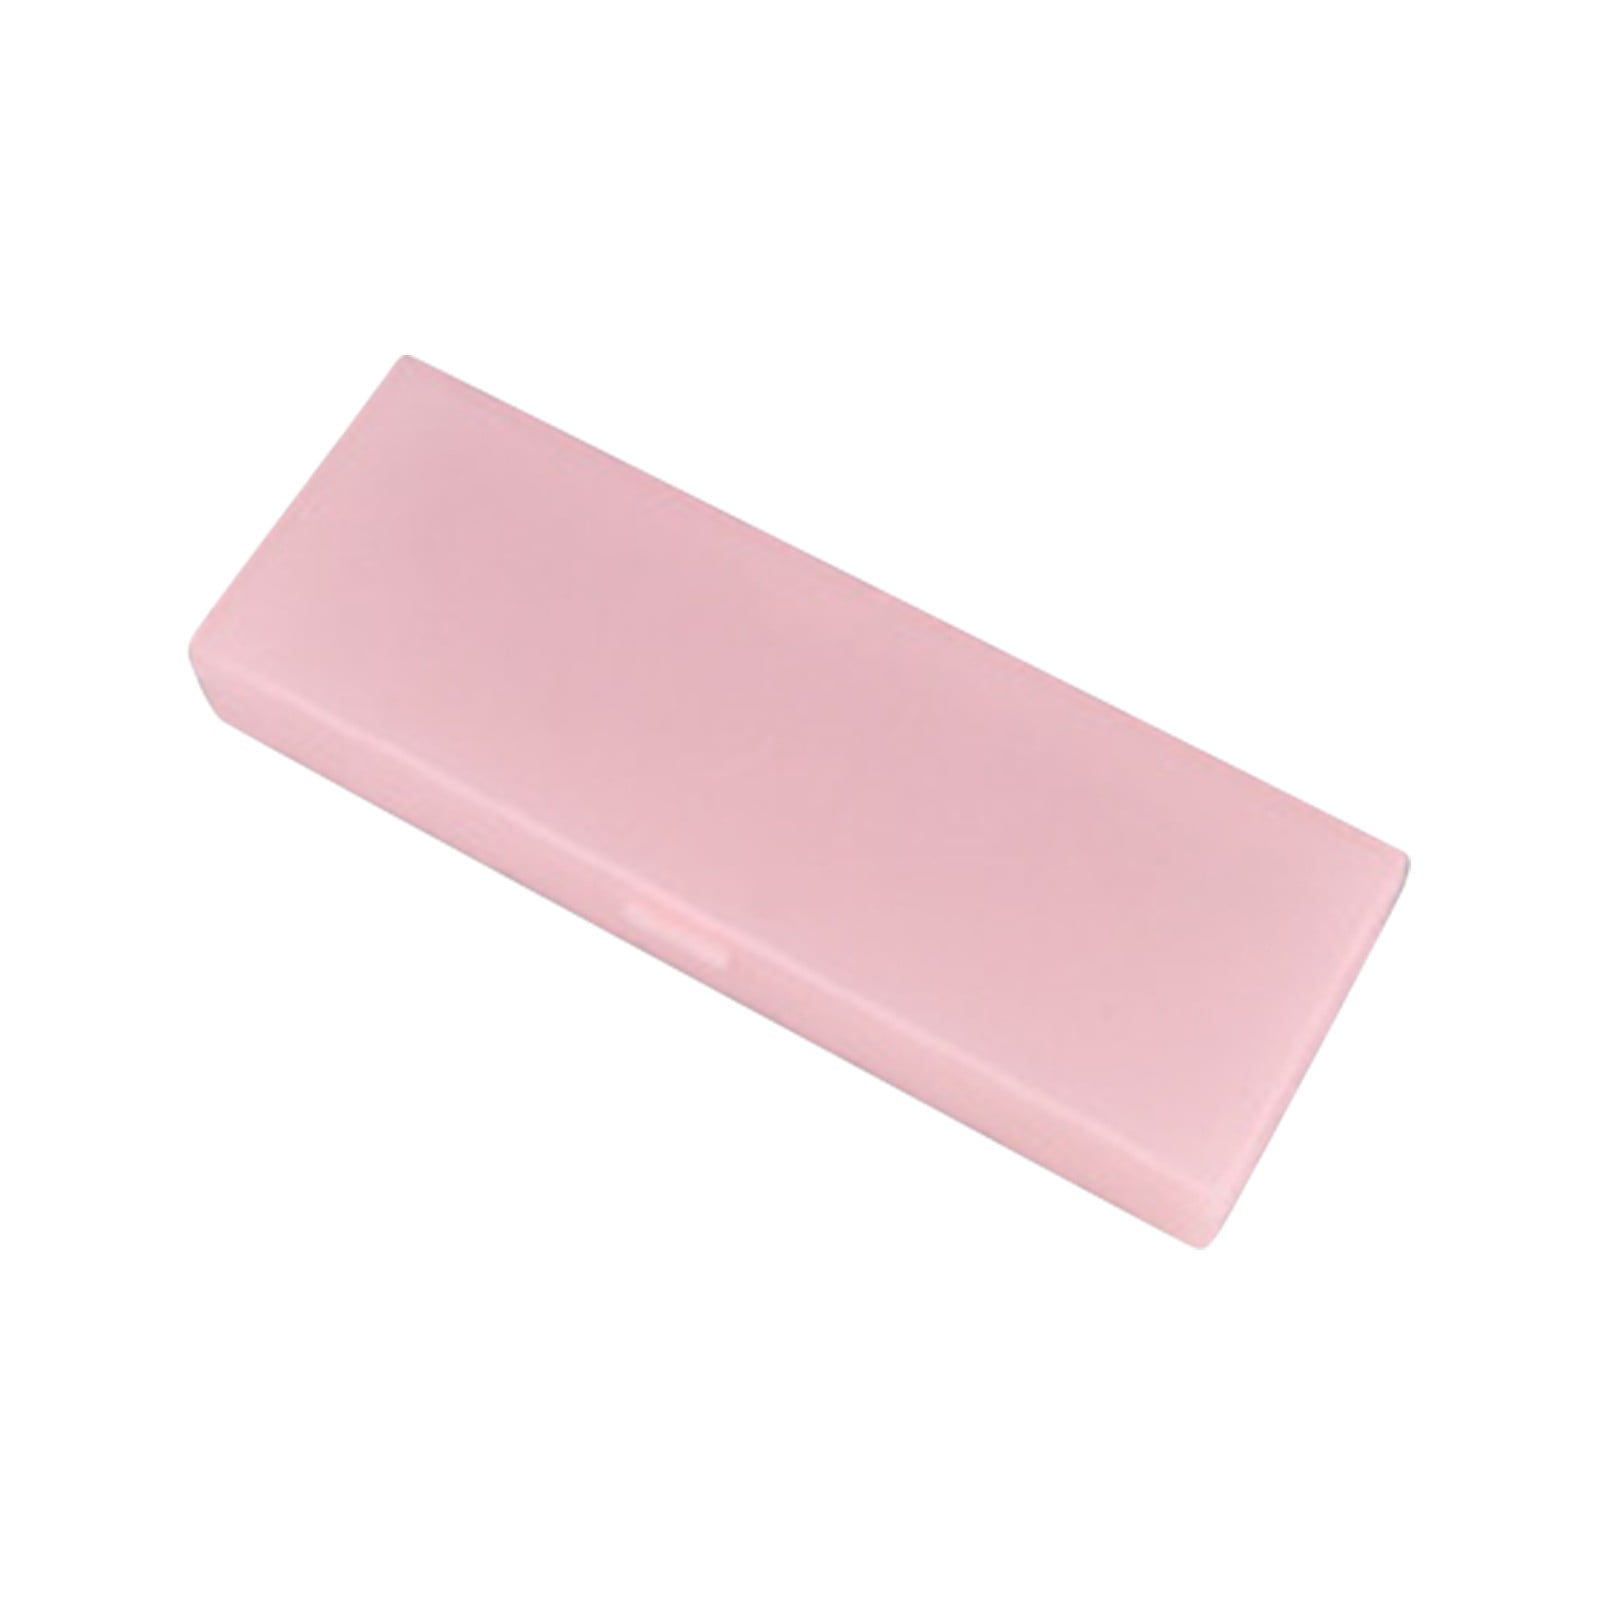 1pc Minimalist Plastic Pencil Case, Classic Durable Baby Pink Pencil Box